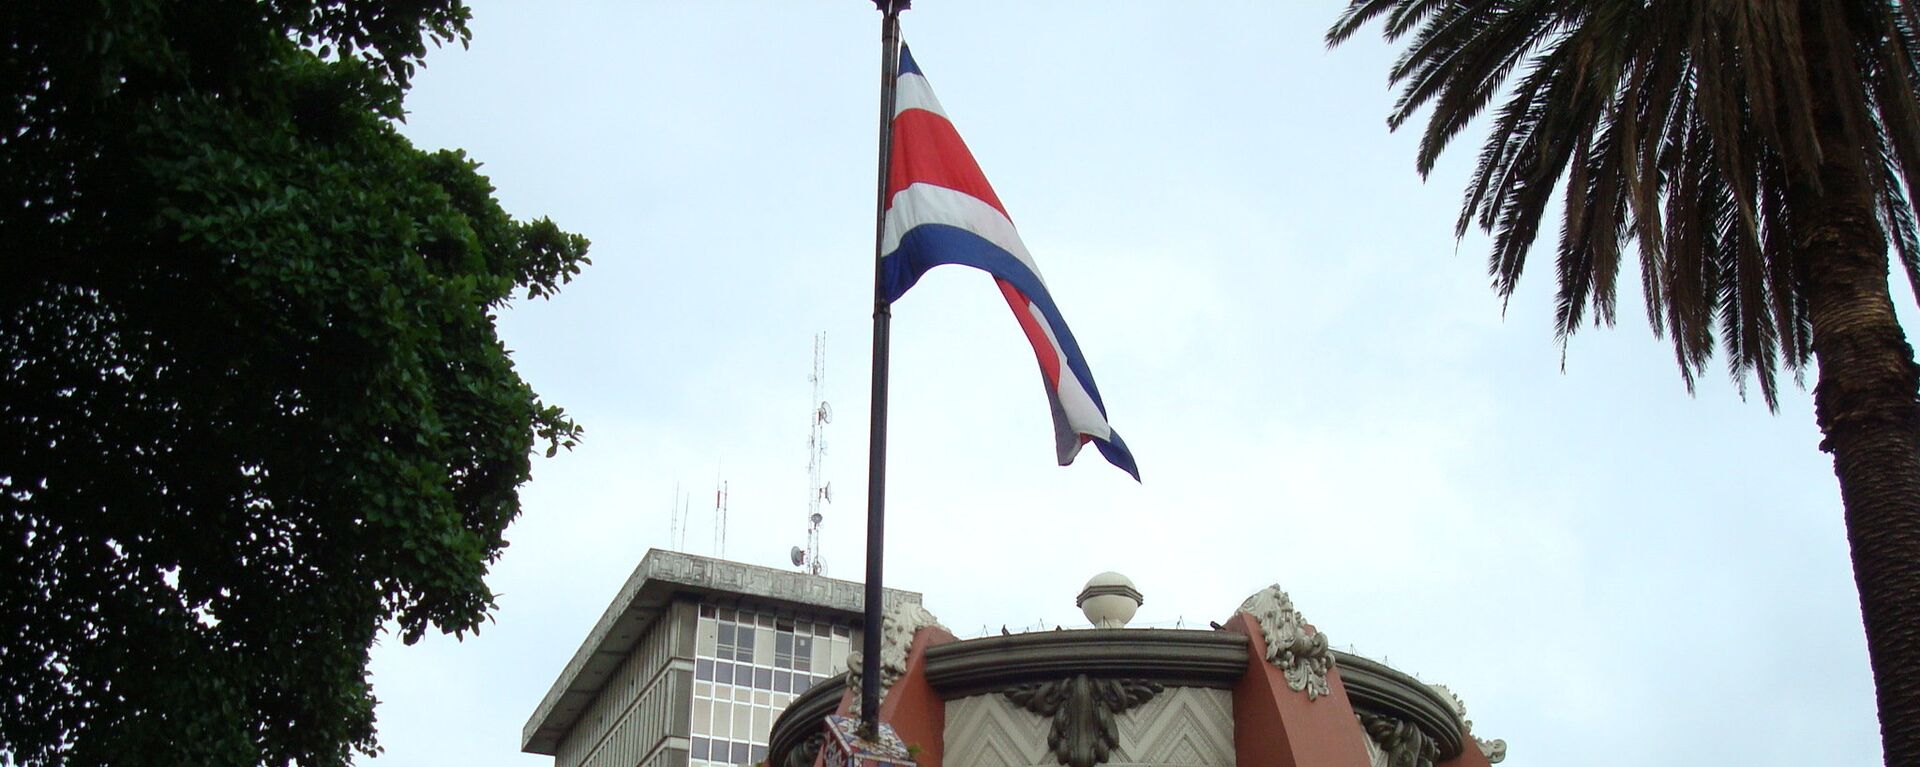 La bandera de Costa Rica en San José, la capital del país - Sputnik Mundo, 1920, 04.04.2021